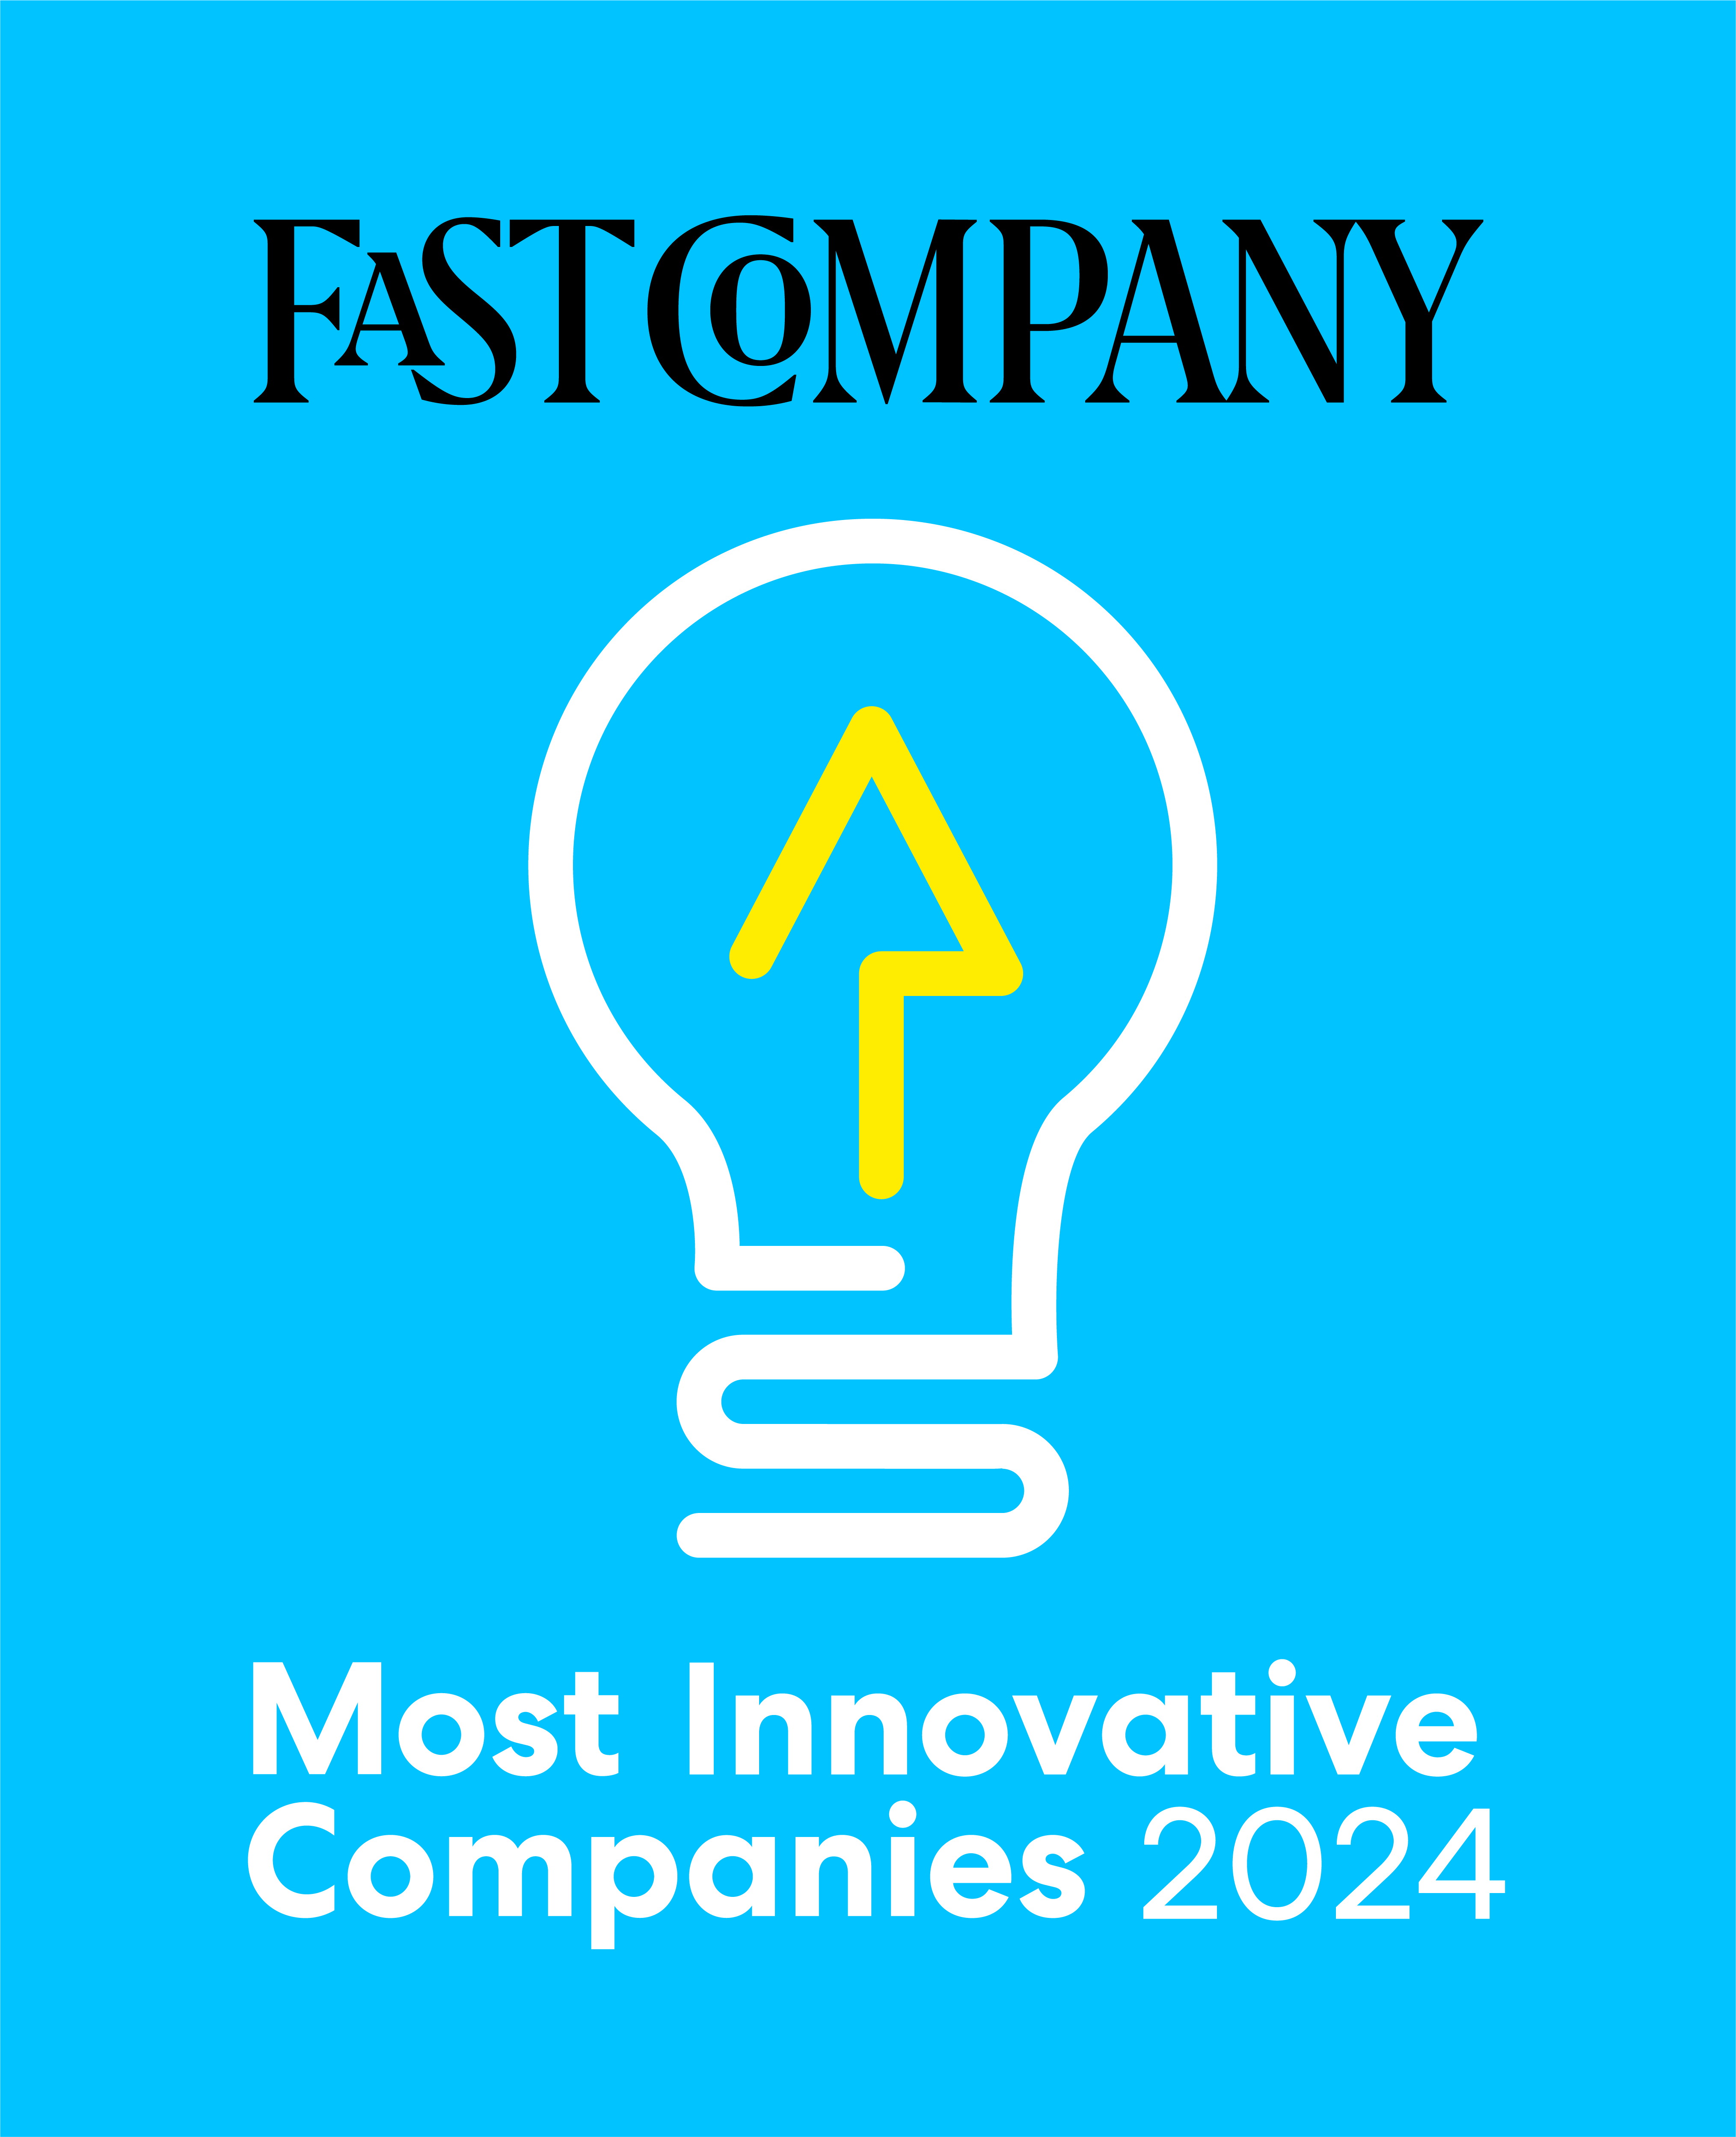 Fast company - most innovative companies 2024 award